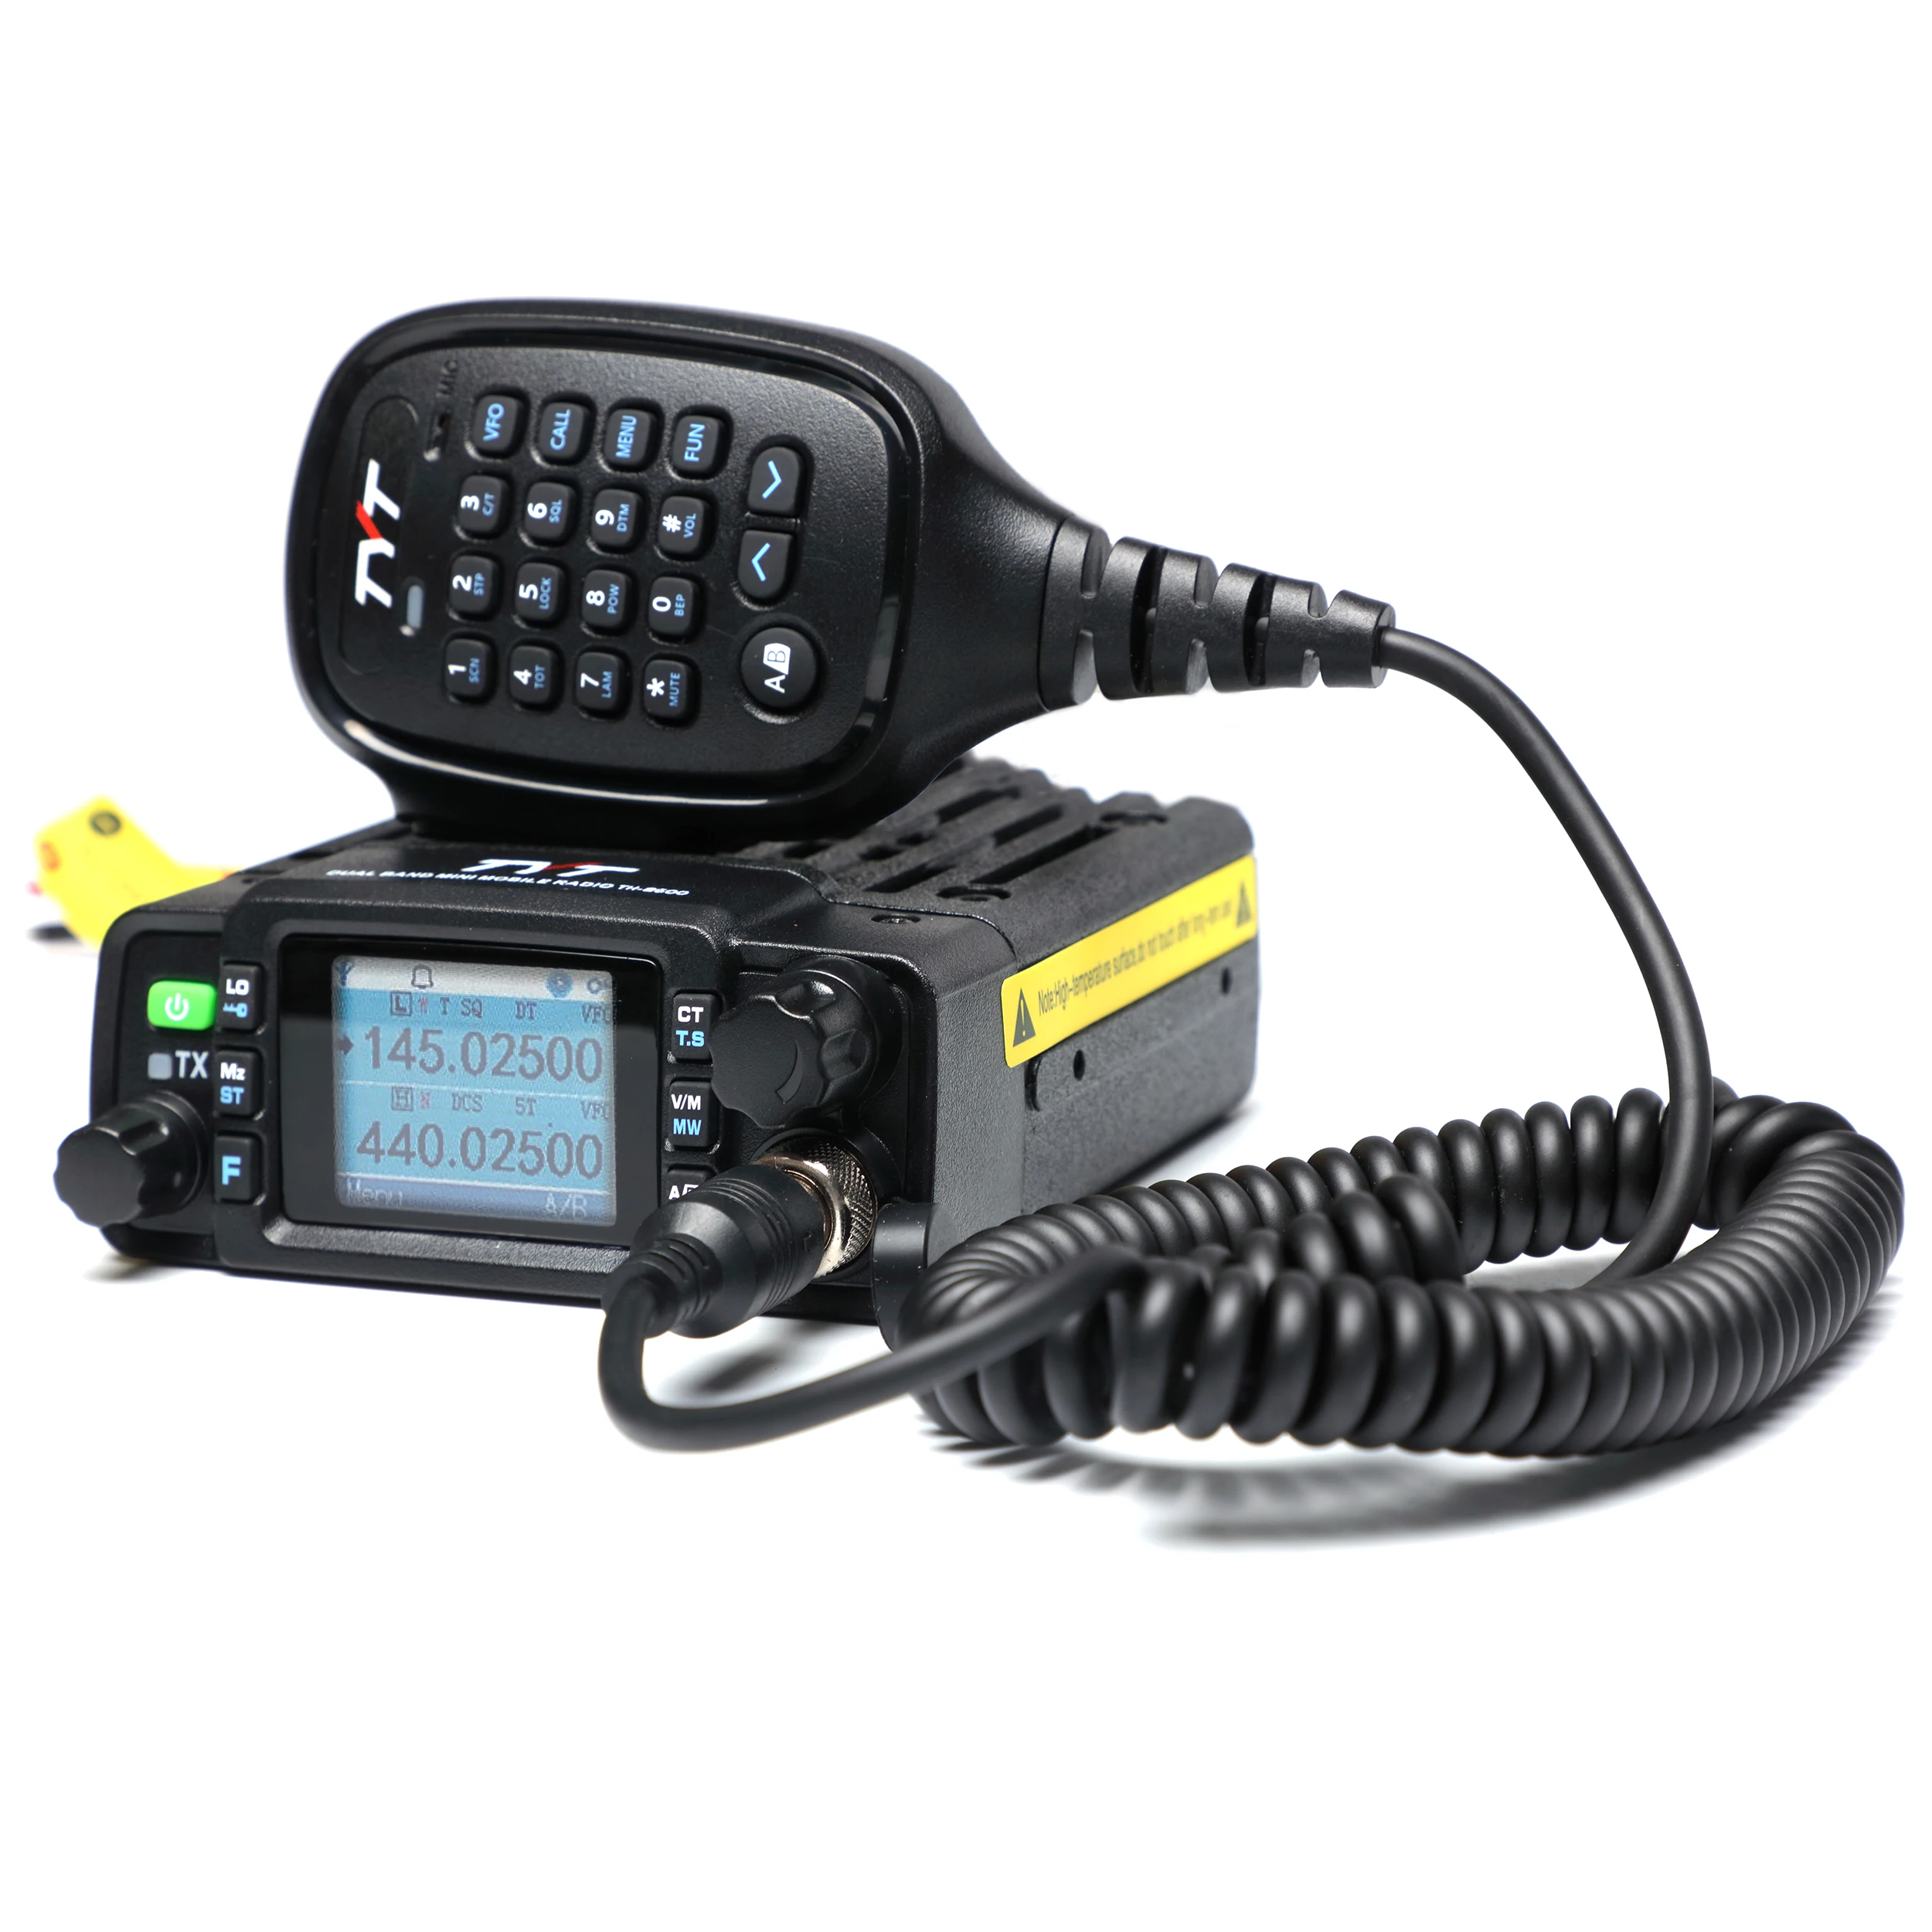 

TYT TH-8600 IP67 Waterproof Dual Band mini mobile radio two way radio 25 watts Walkie Talkie Ham Radio Communicator